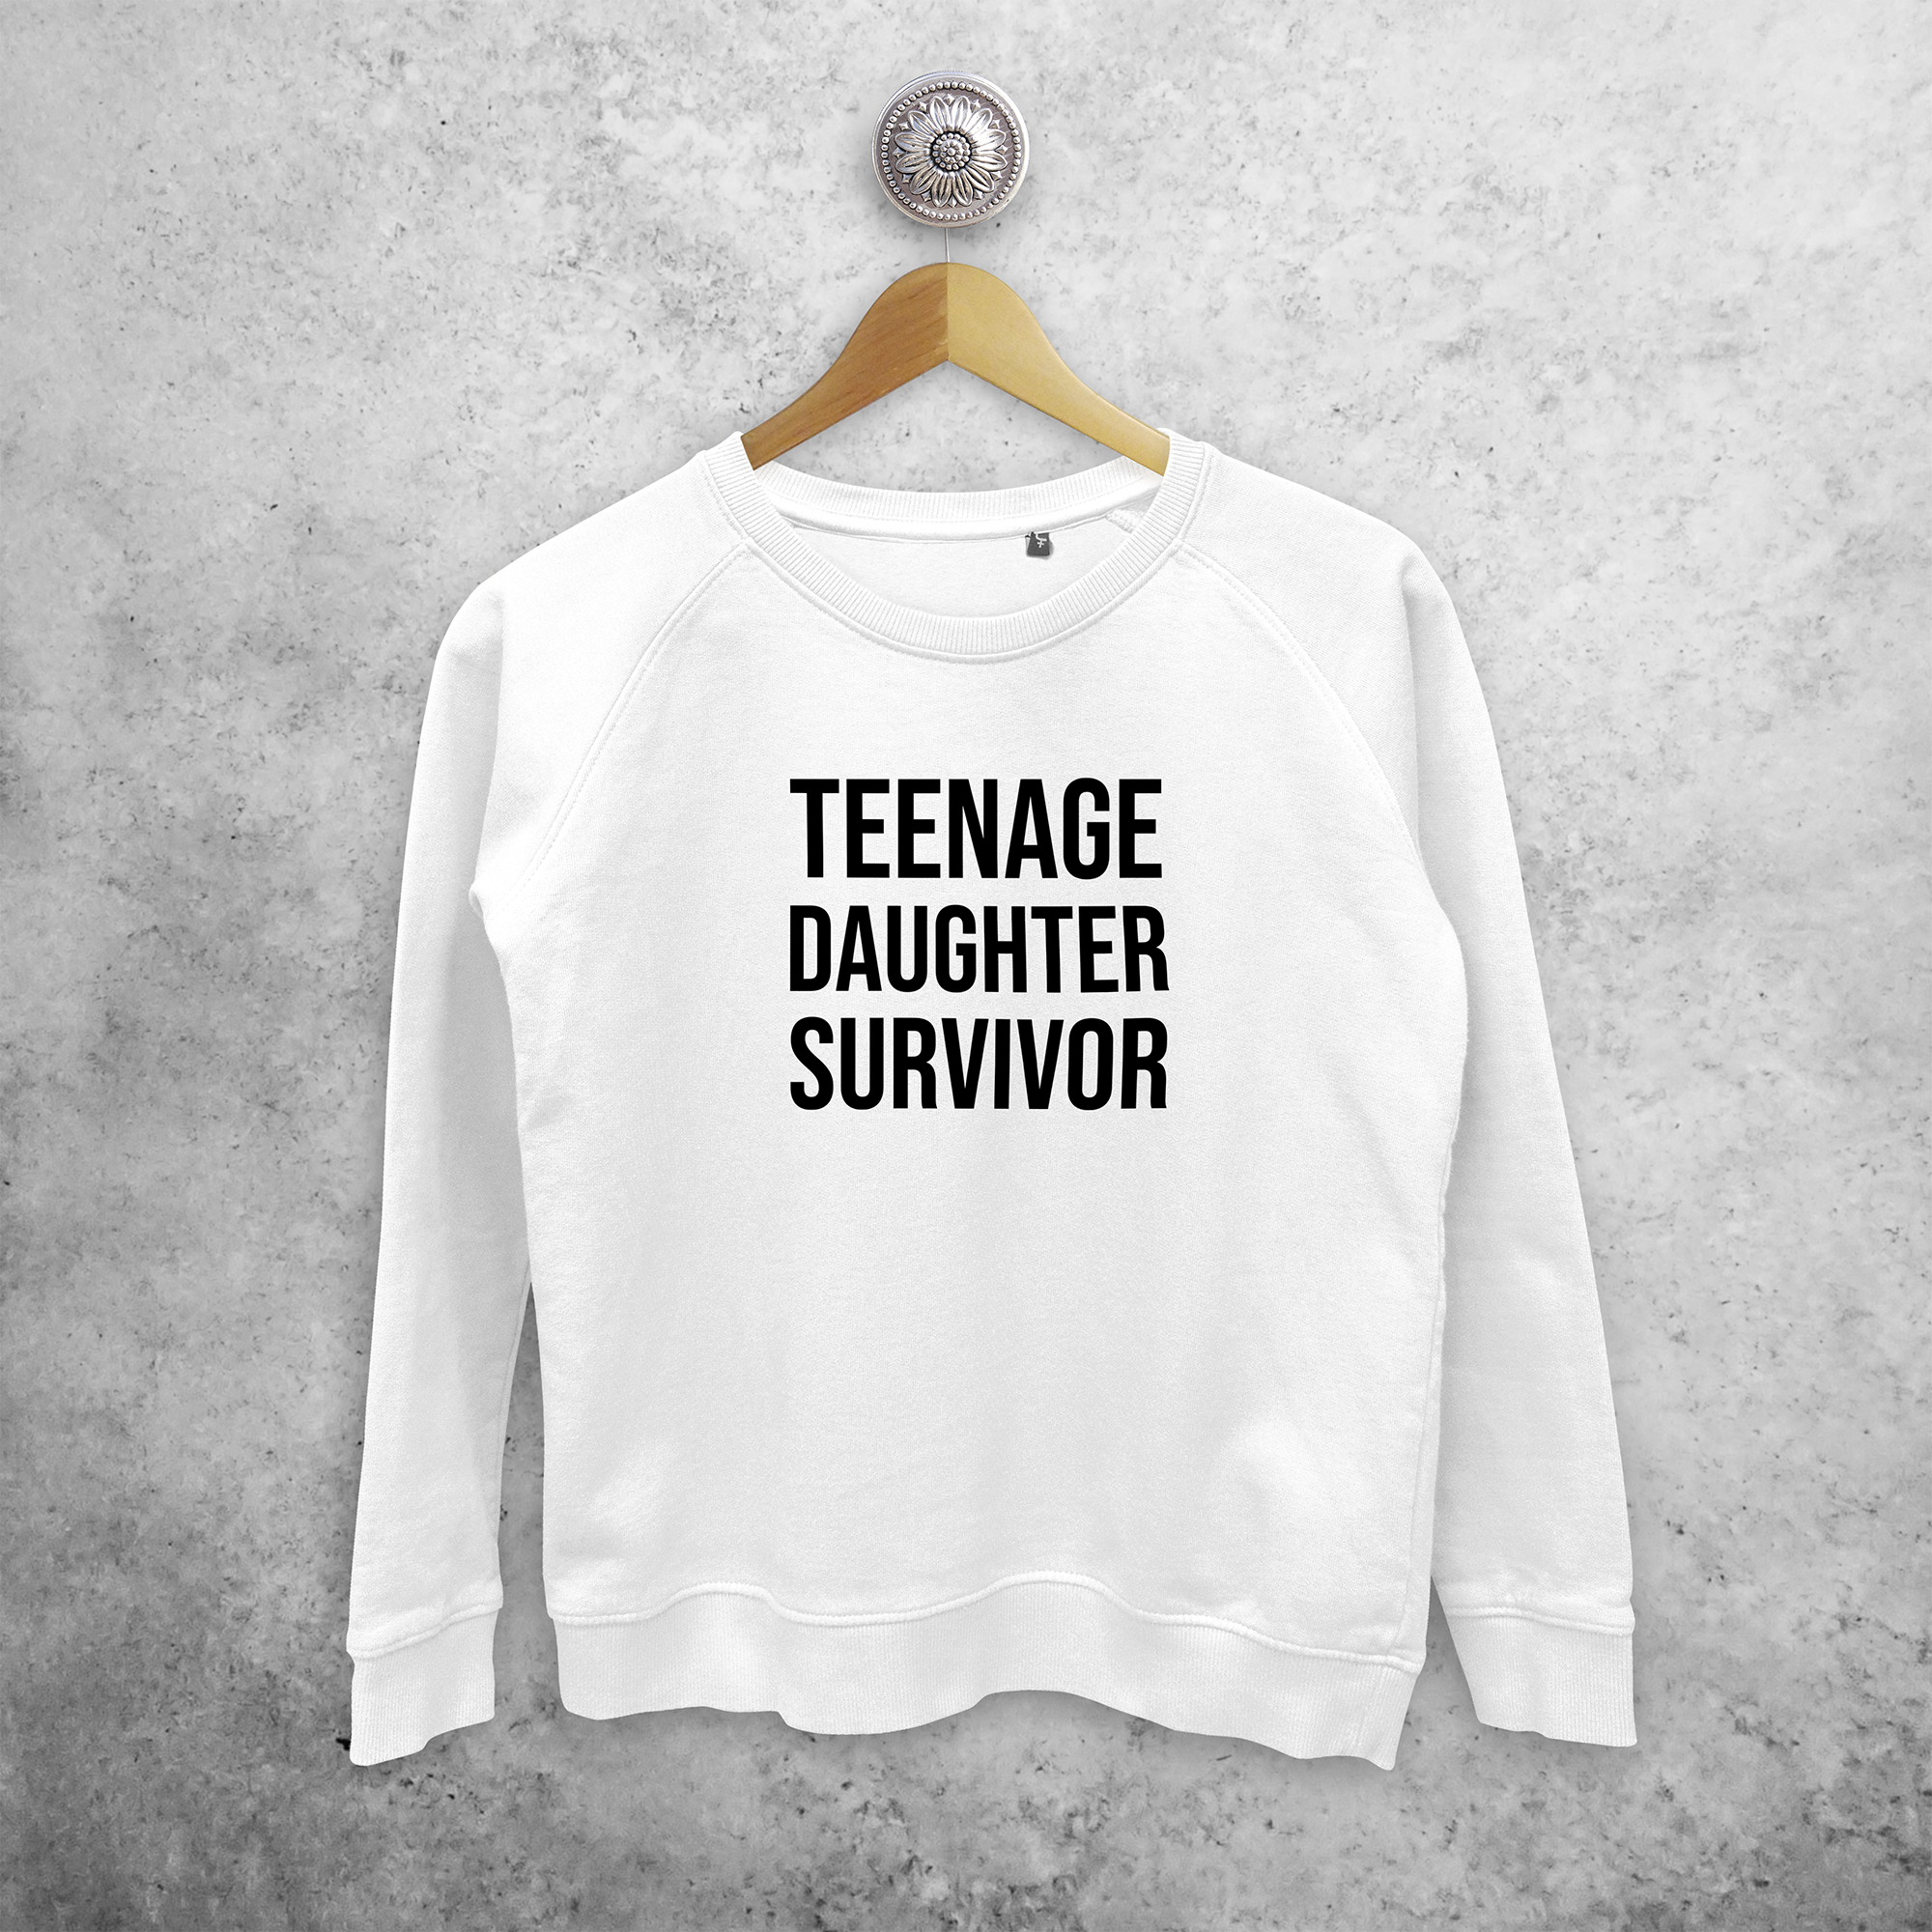 'Teenage daughter survivor' sweater